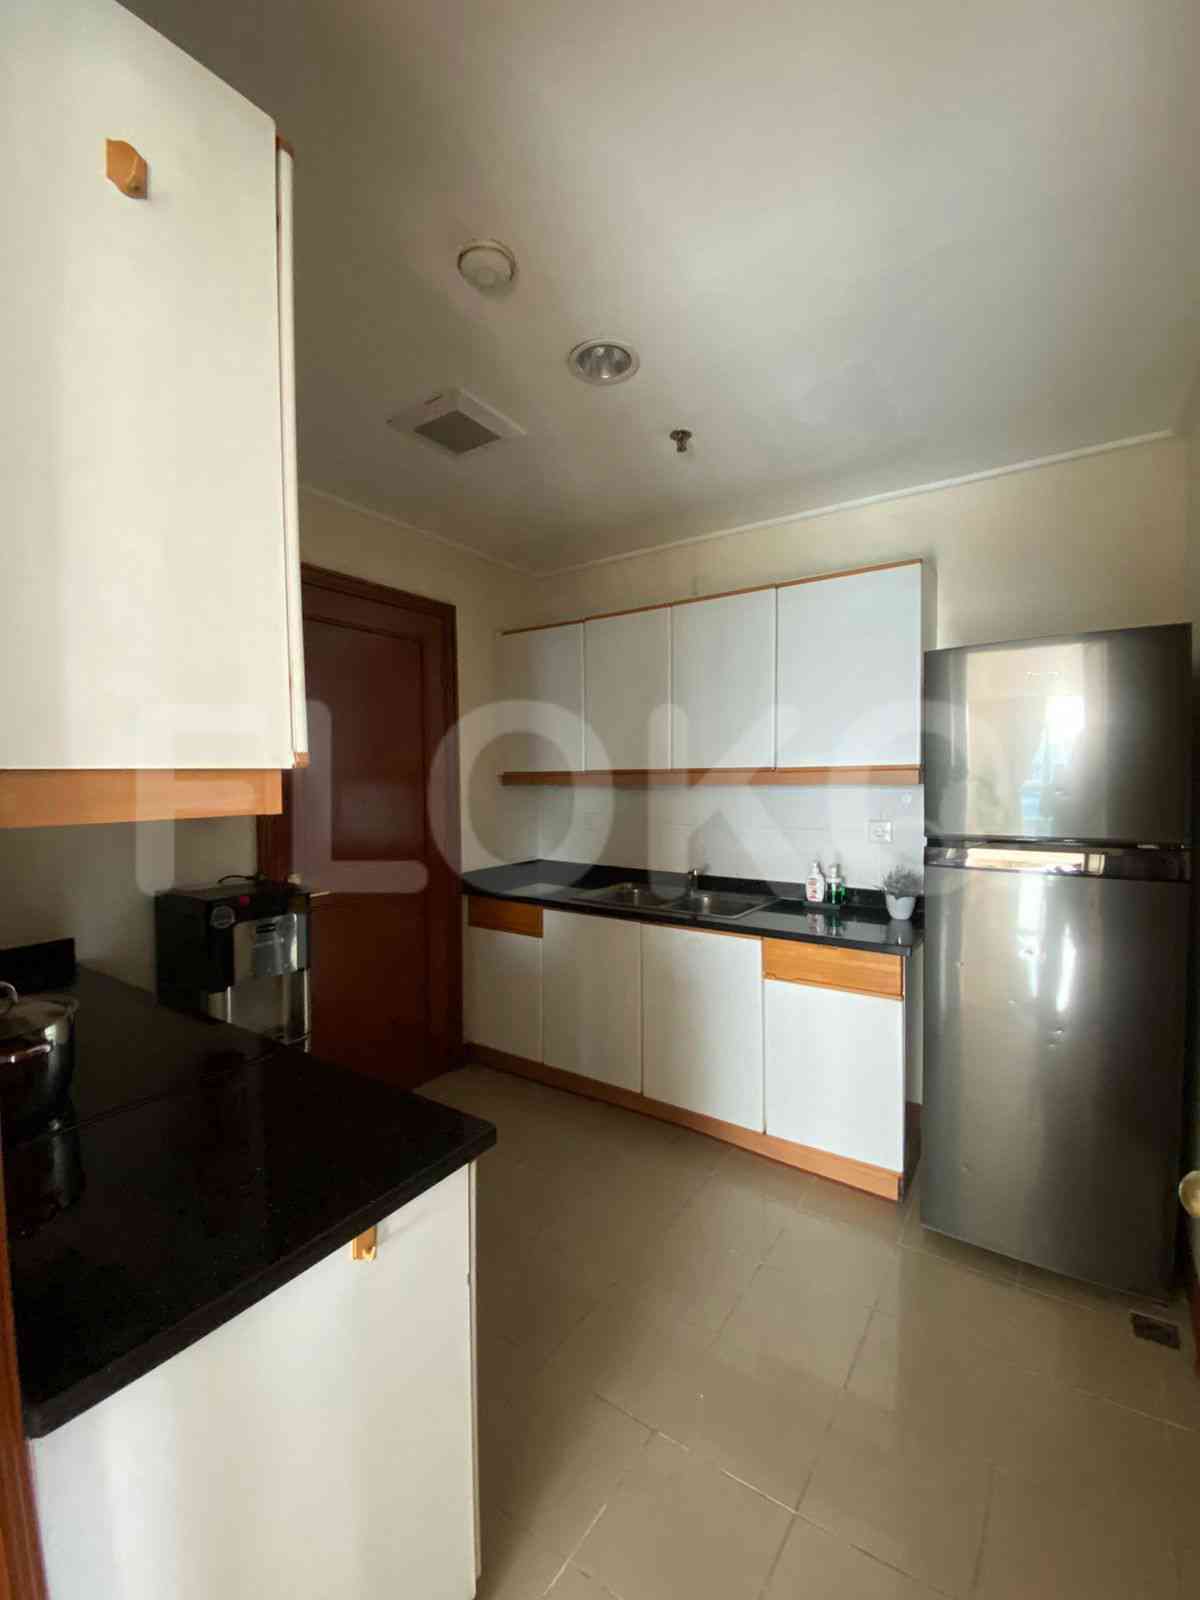 3 Bedroom on 10th Floor for Rent in Casablanca Apartment - fte130 1